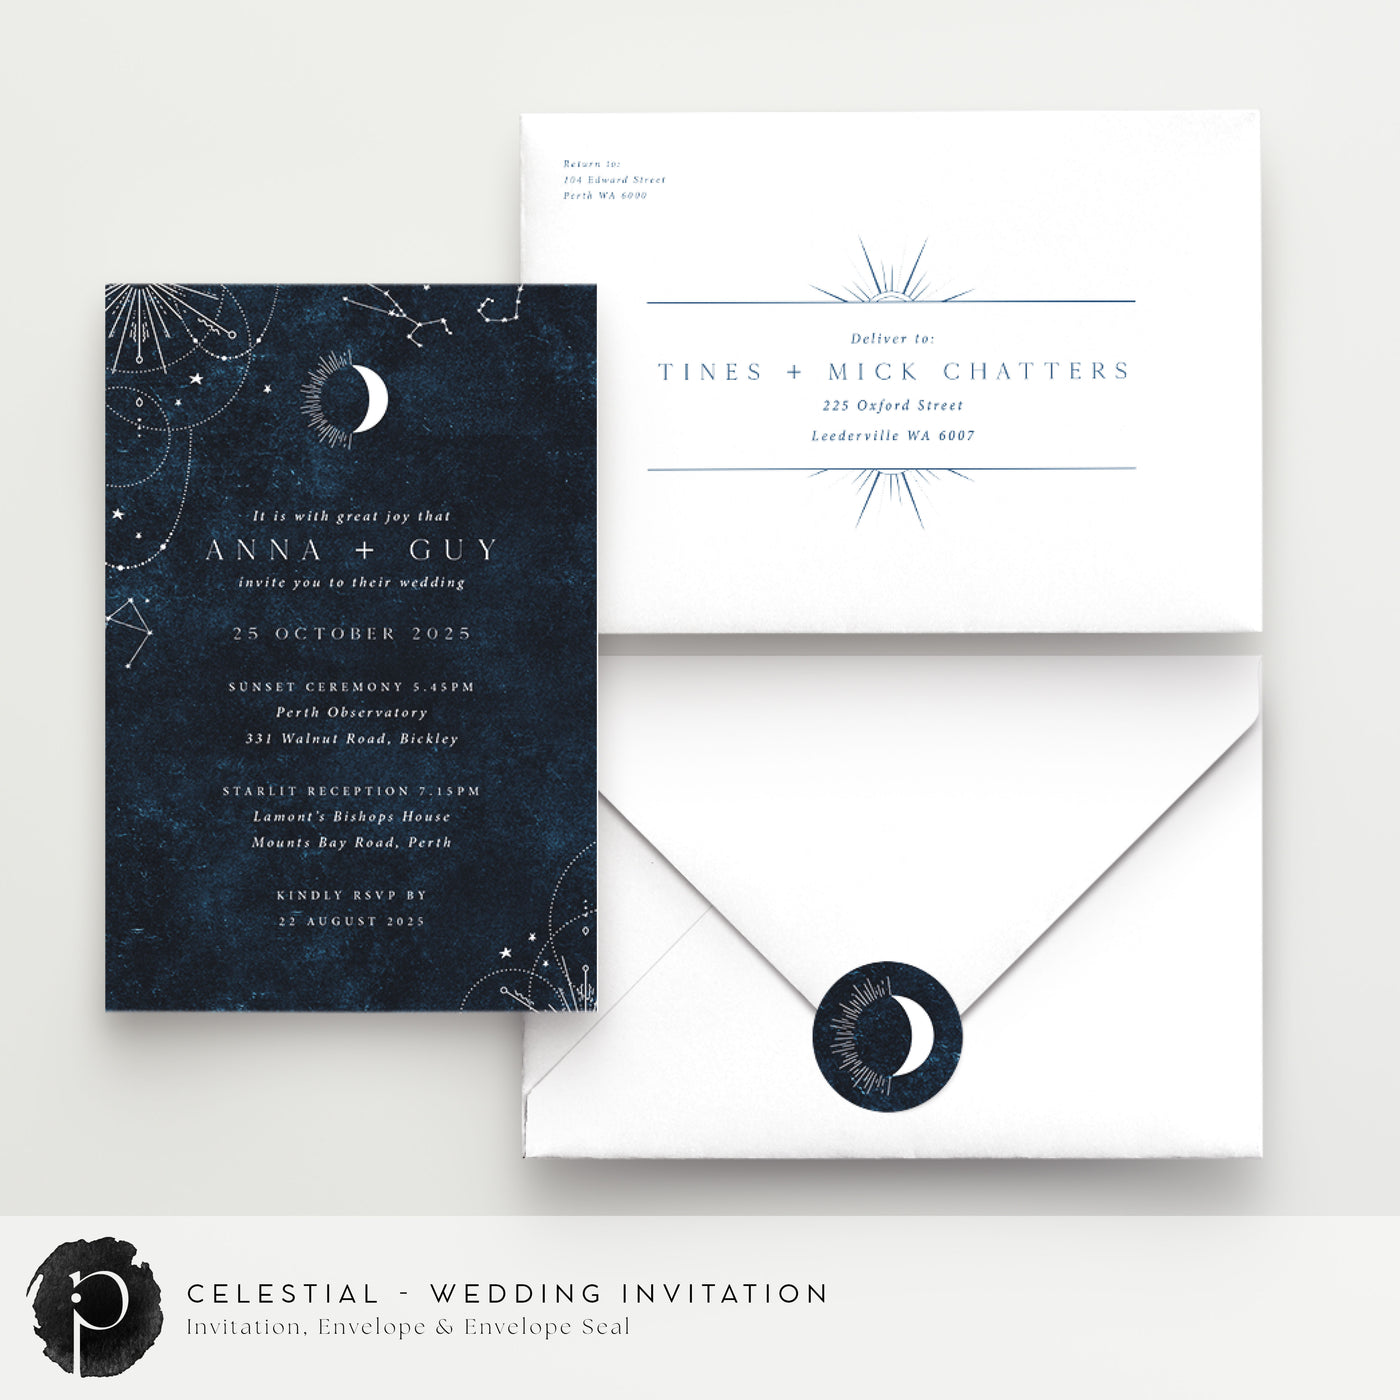 Celestial - Wedding Invitations